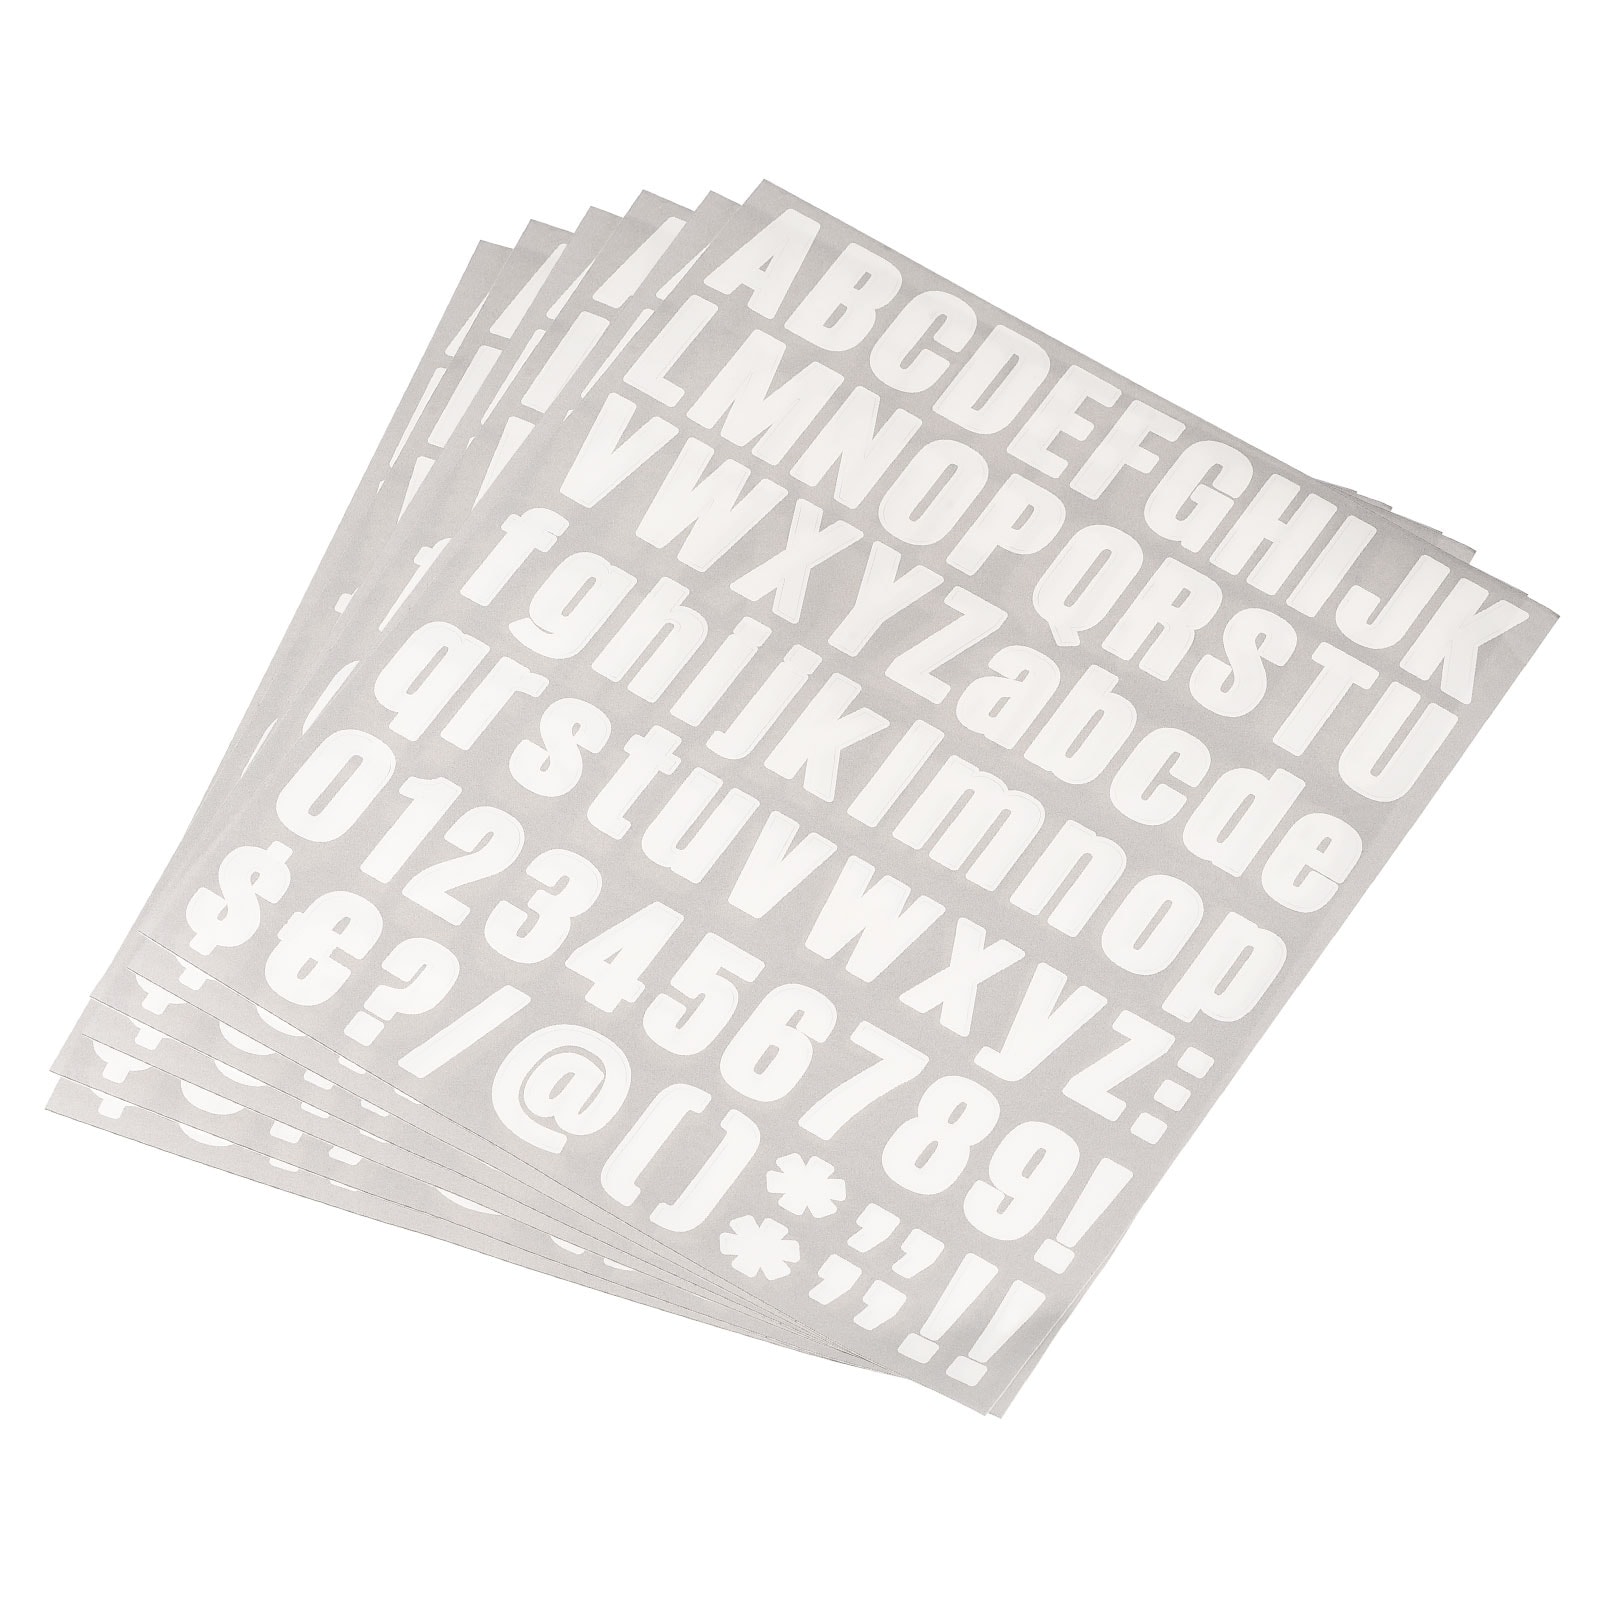 1 Inch Self Adhesive Waterproof Vinyl Letter Number Stickers 6